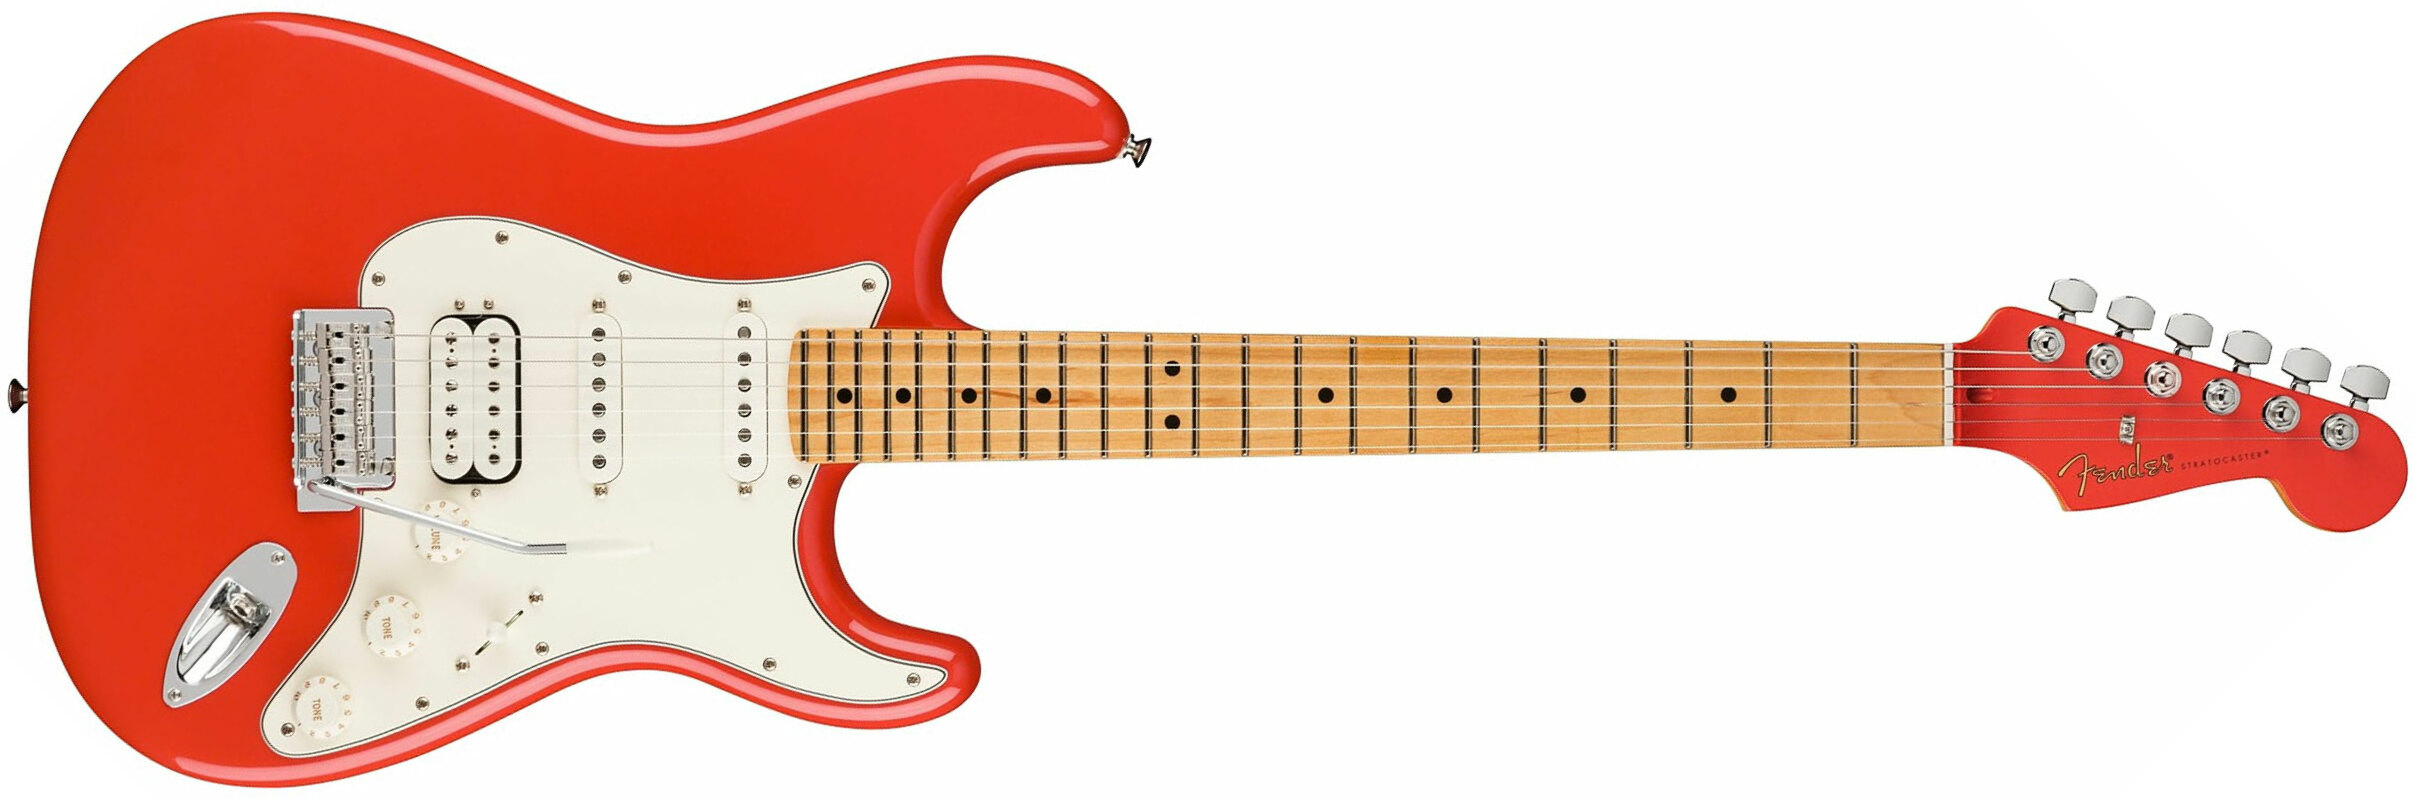 Fender Strat Player Hss Ltd Mex Trem Mn - Fiesta Red - Str shape electric guitar - Main picture